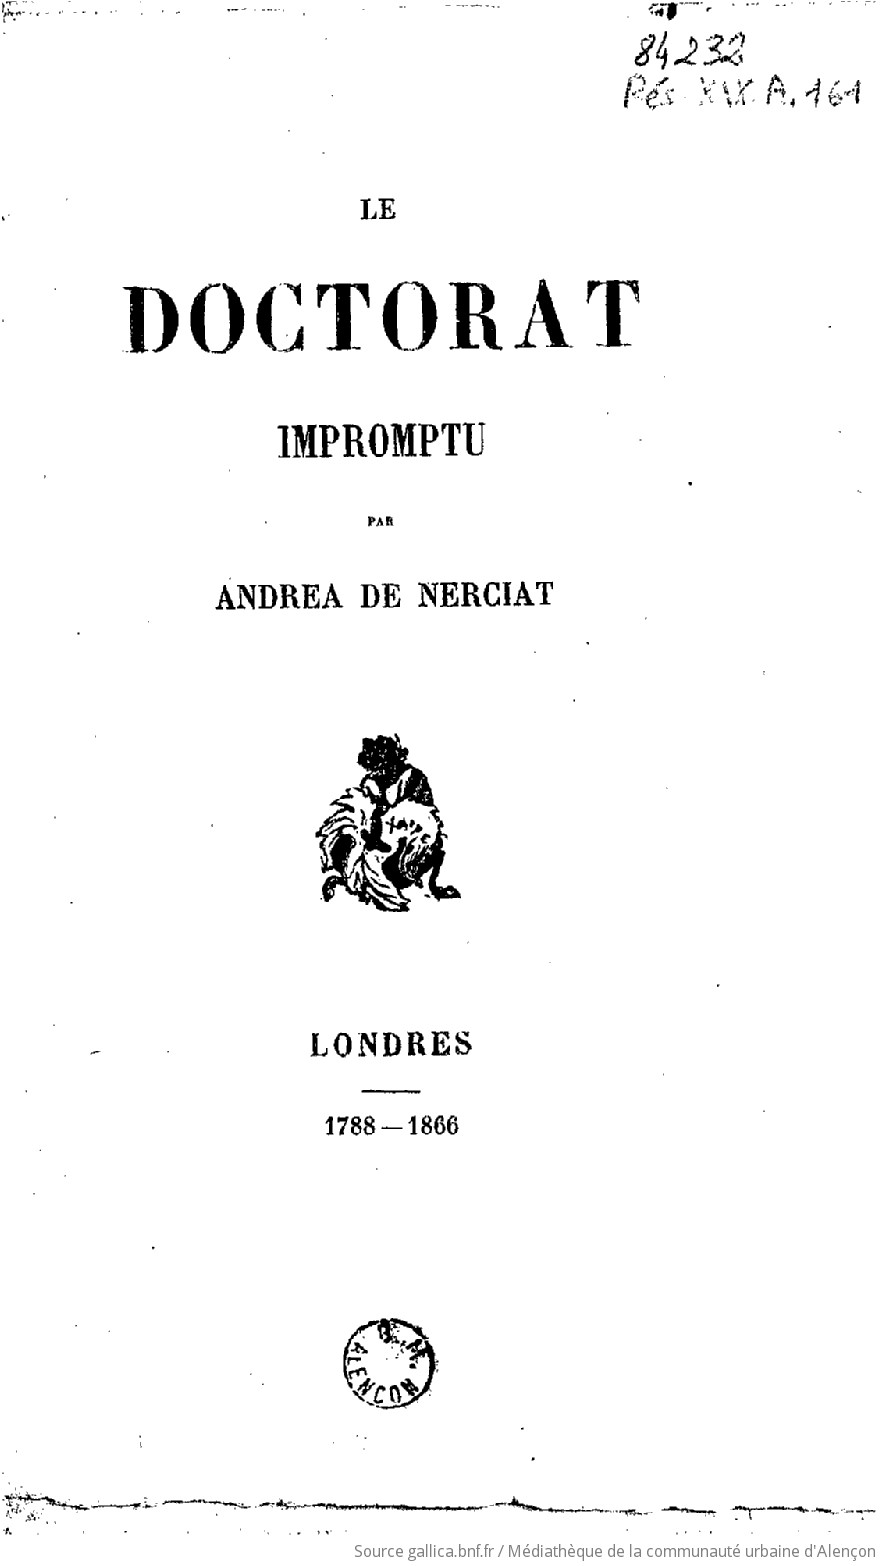 Le doctorat impromptu / par Andréa de Nerciat | Gallica